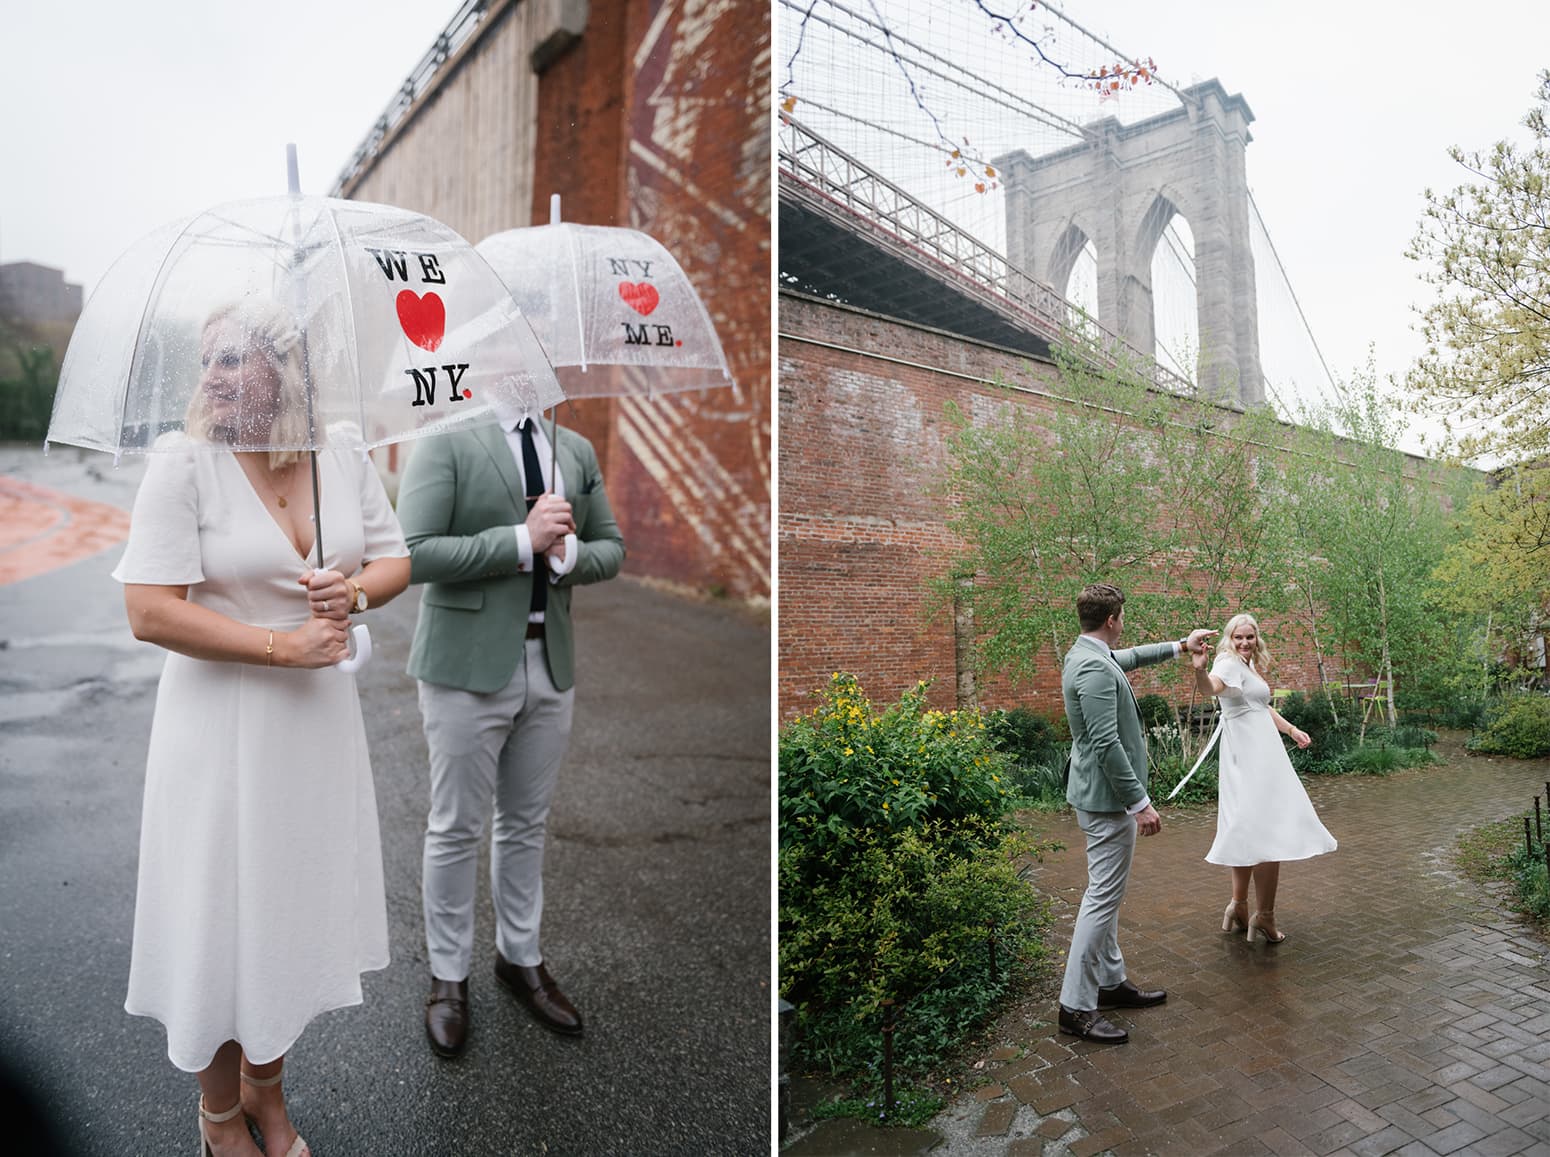 Brooklyn Bridge Park elopement and rainy day wedding in NYC. Photos by Brooklyn wedding photographer Everly Studios, www.everlystudios.com